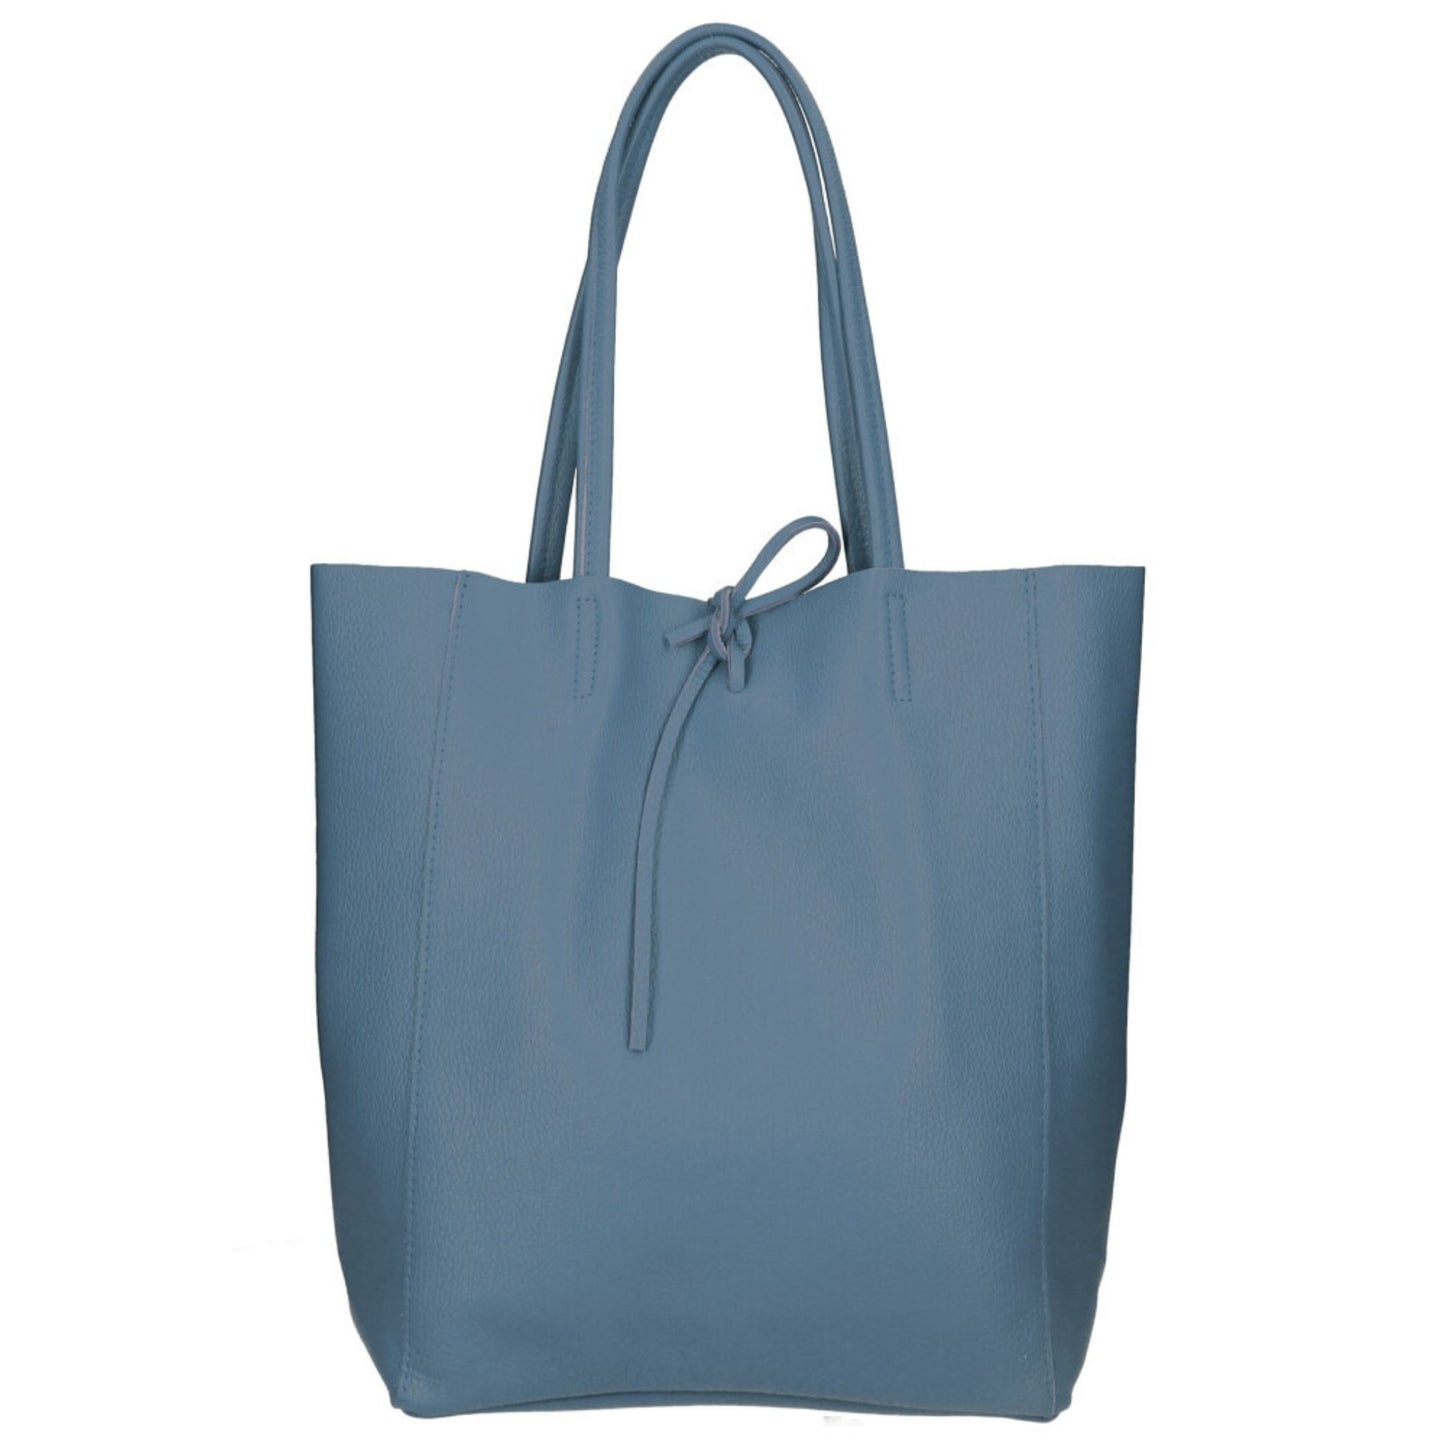 Blue leather shopper bag